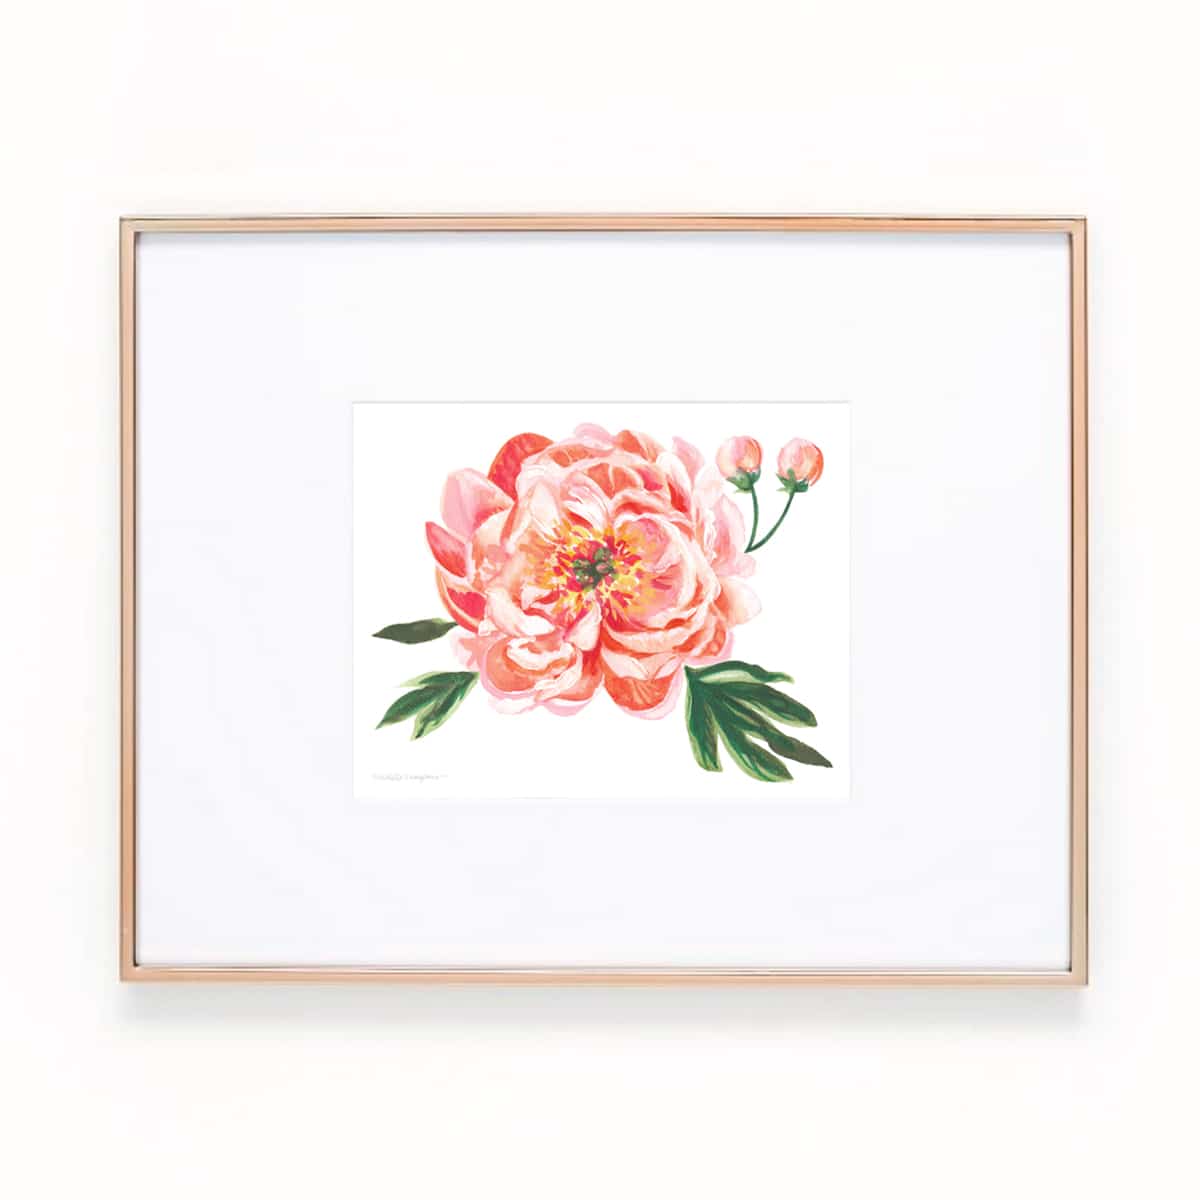 Peach peony flower botanical watercolor painting art print by artist Michelle Mospens. | Mospens Studio